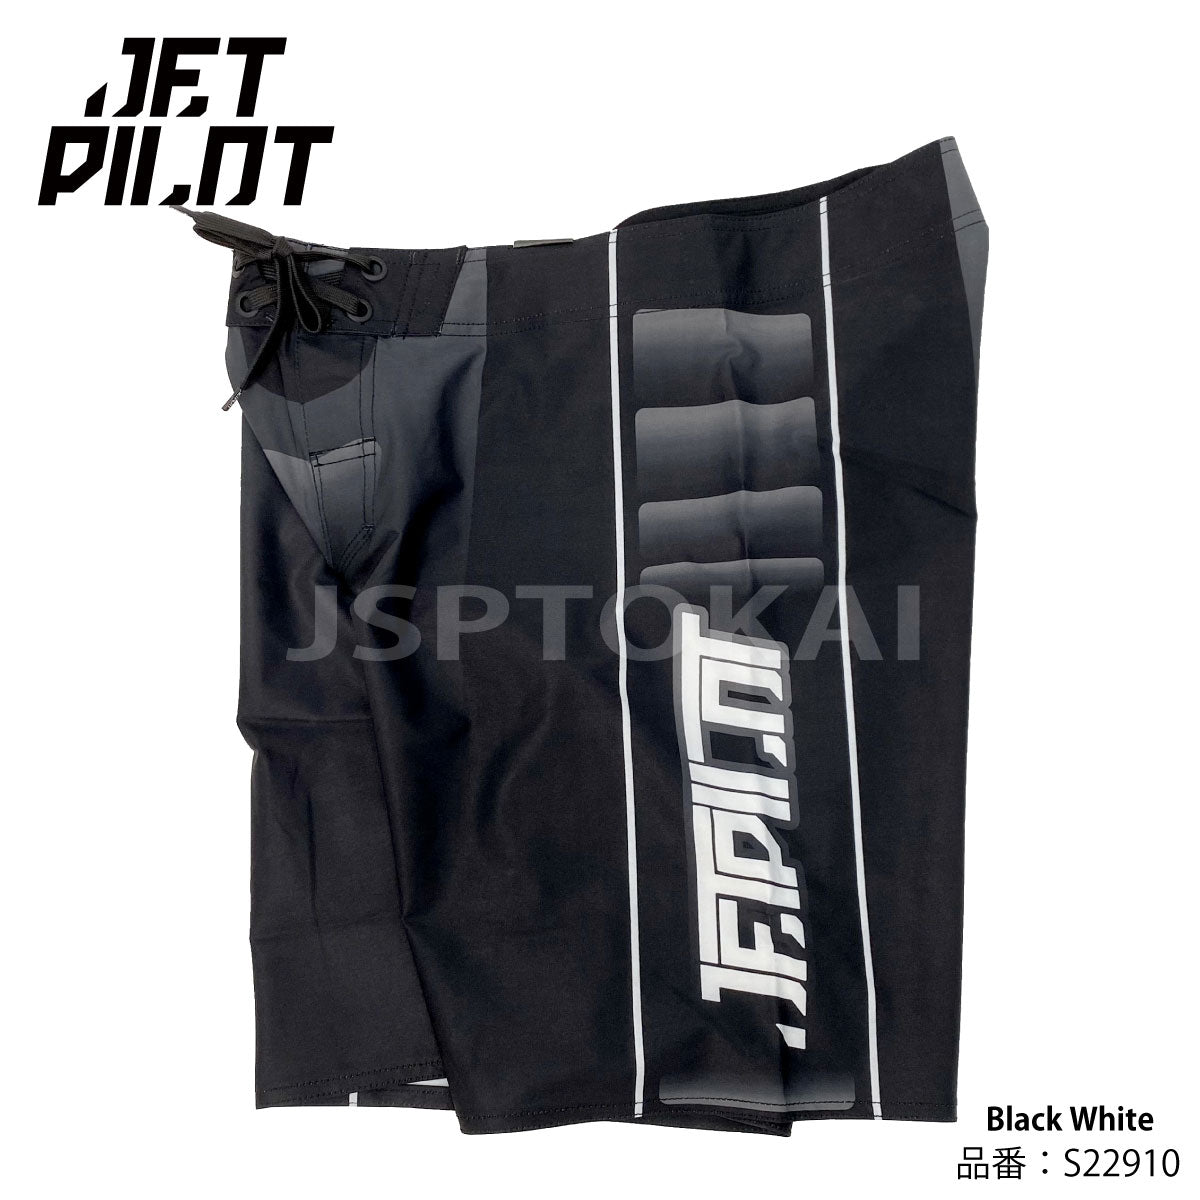 【SALE】JETPILOTジェットパイロット PODIUM MEN'S  BOARDSHORTS ボードショーツ   S22910